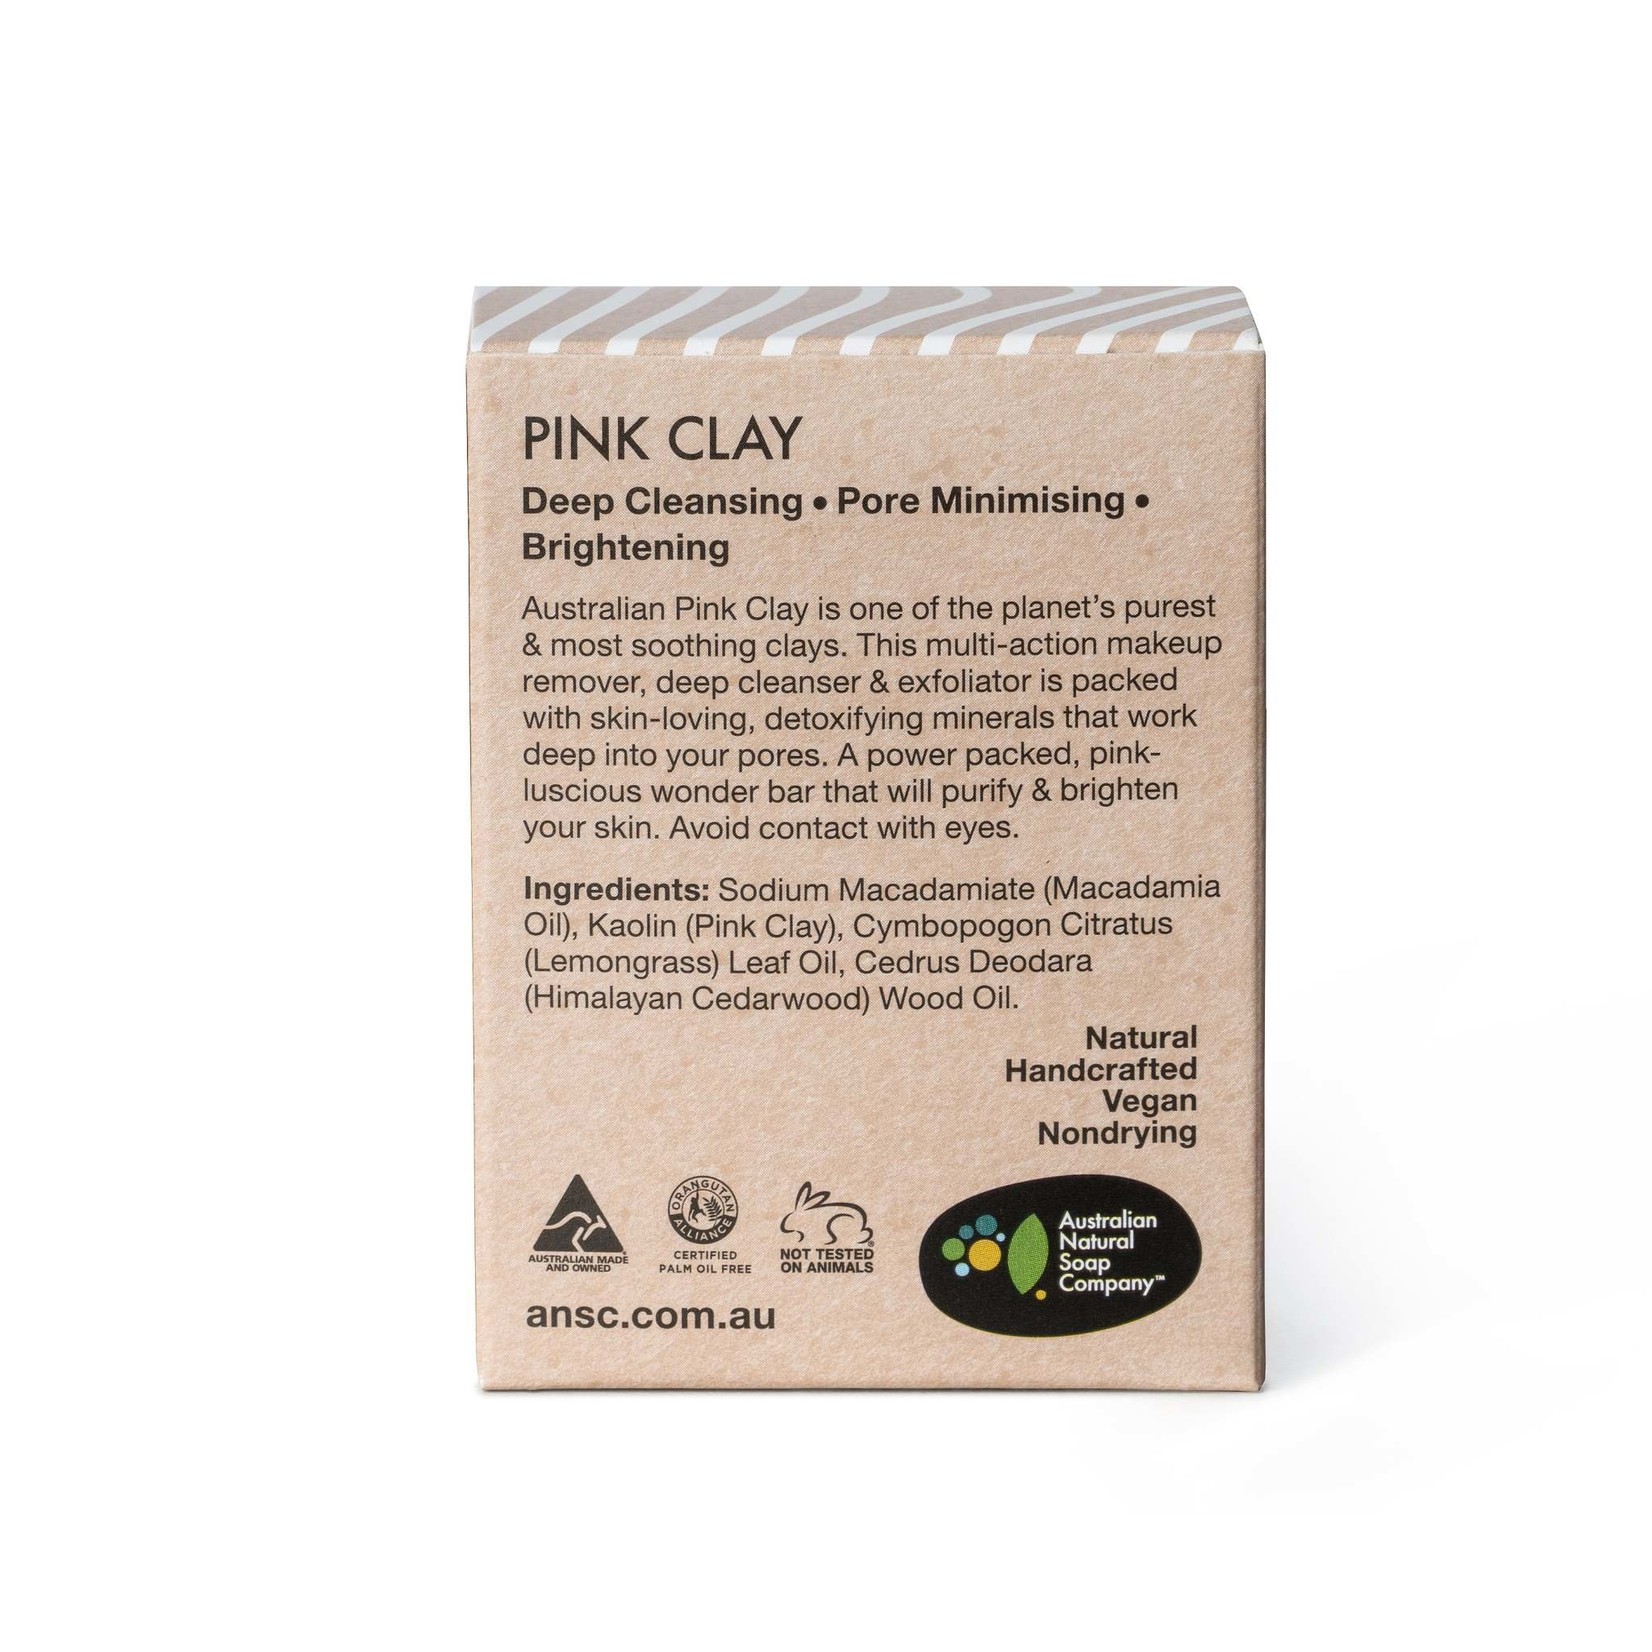 The Australian Natural Soap Company The Australian Natural Soap Company Face Soap Bar - Pink Clay